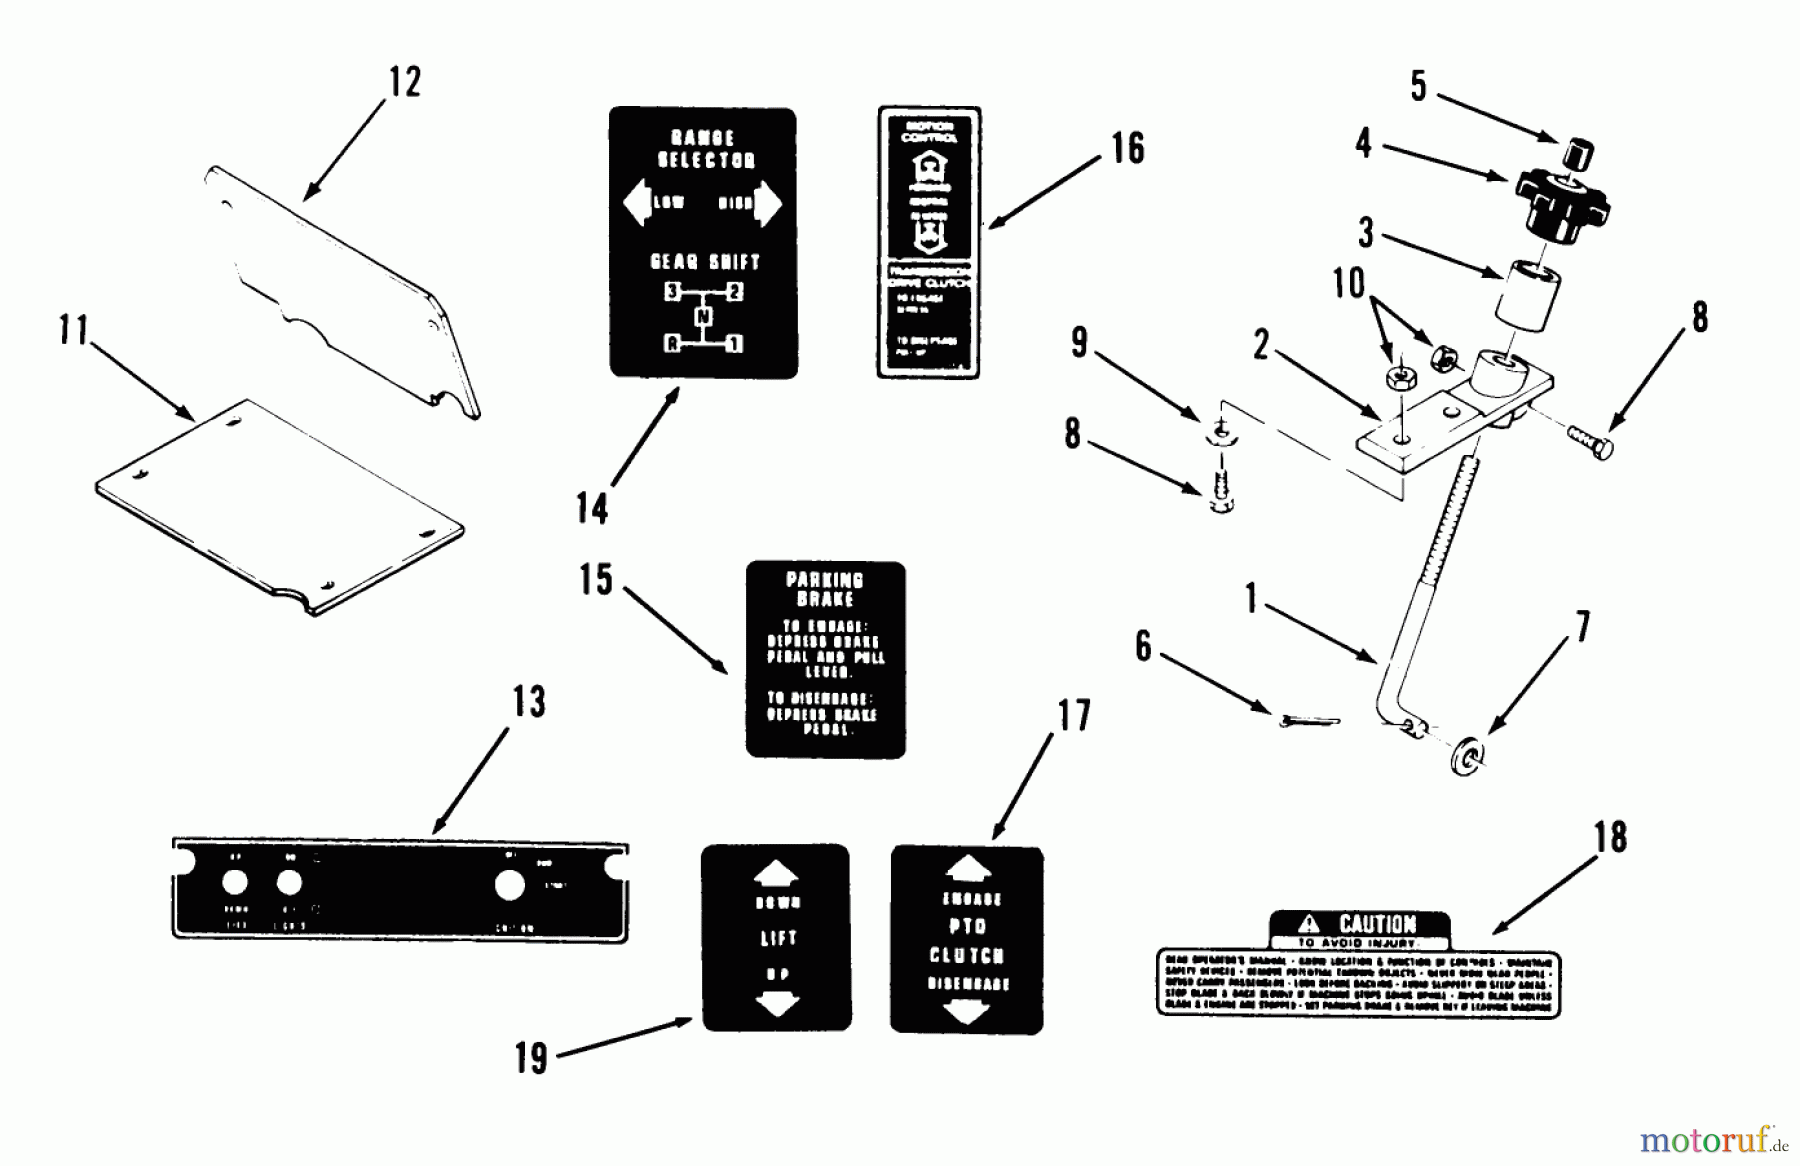  Toro Neu Accessories, Mower 86726 - Toro Dial-A-Hite, 1987 DIAL-A-HITE PARTS LIST FACTORY ORDER NO. 86726